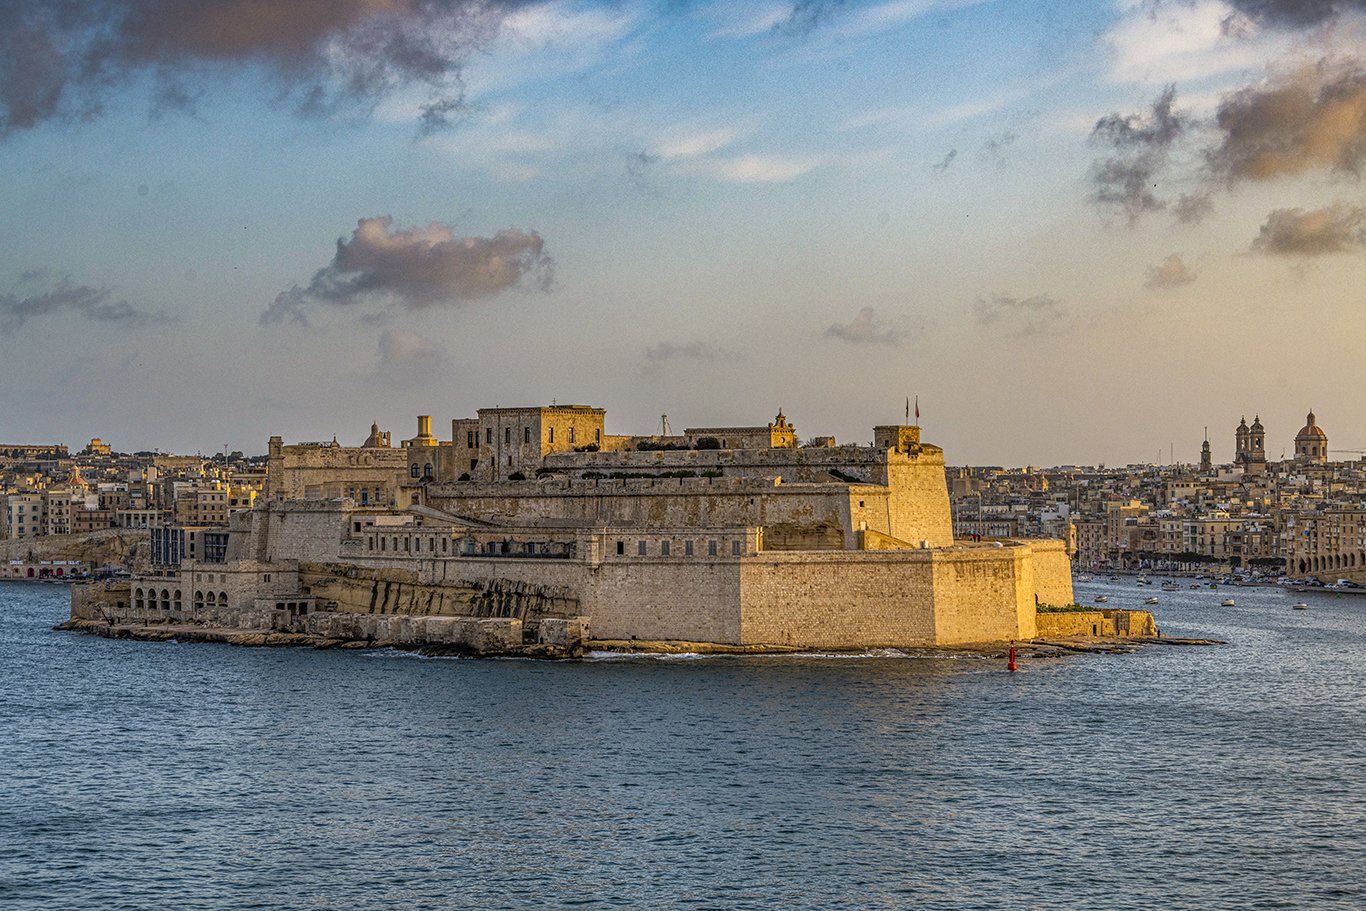 Malta Island Photo Gallery by David Ferguson